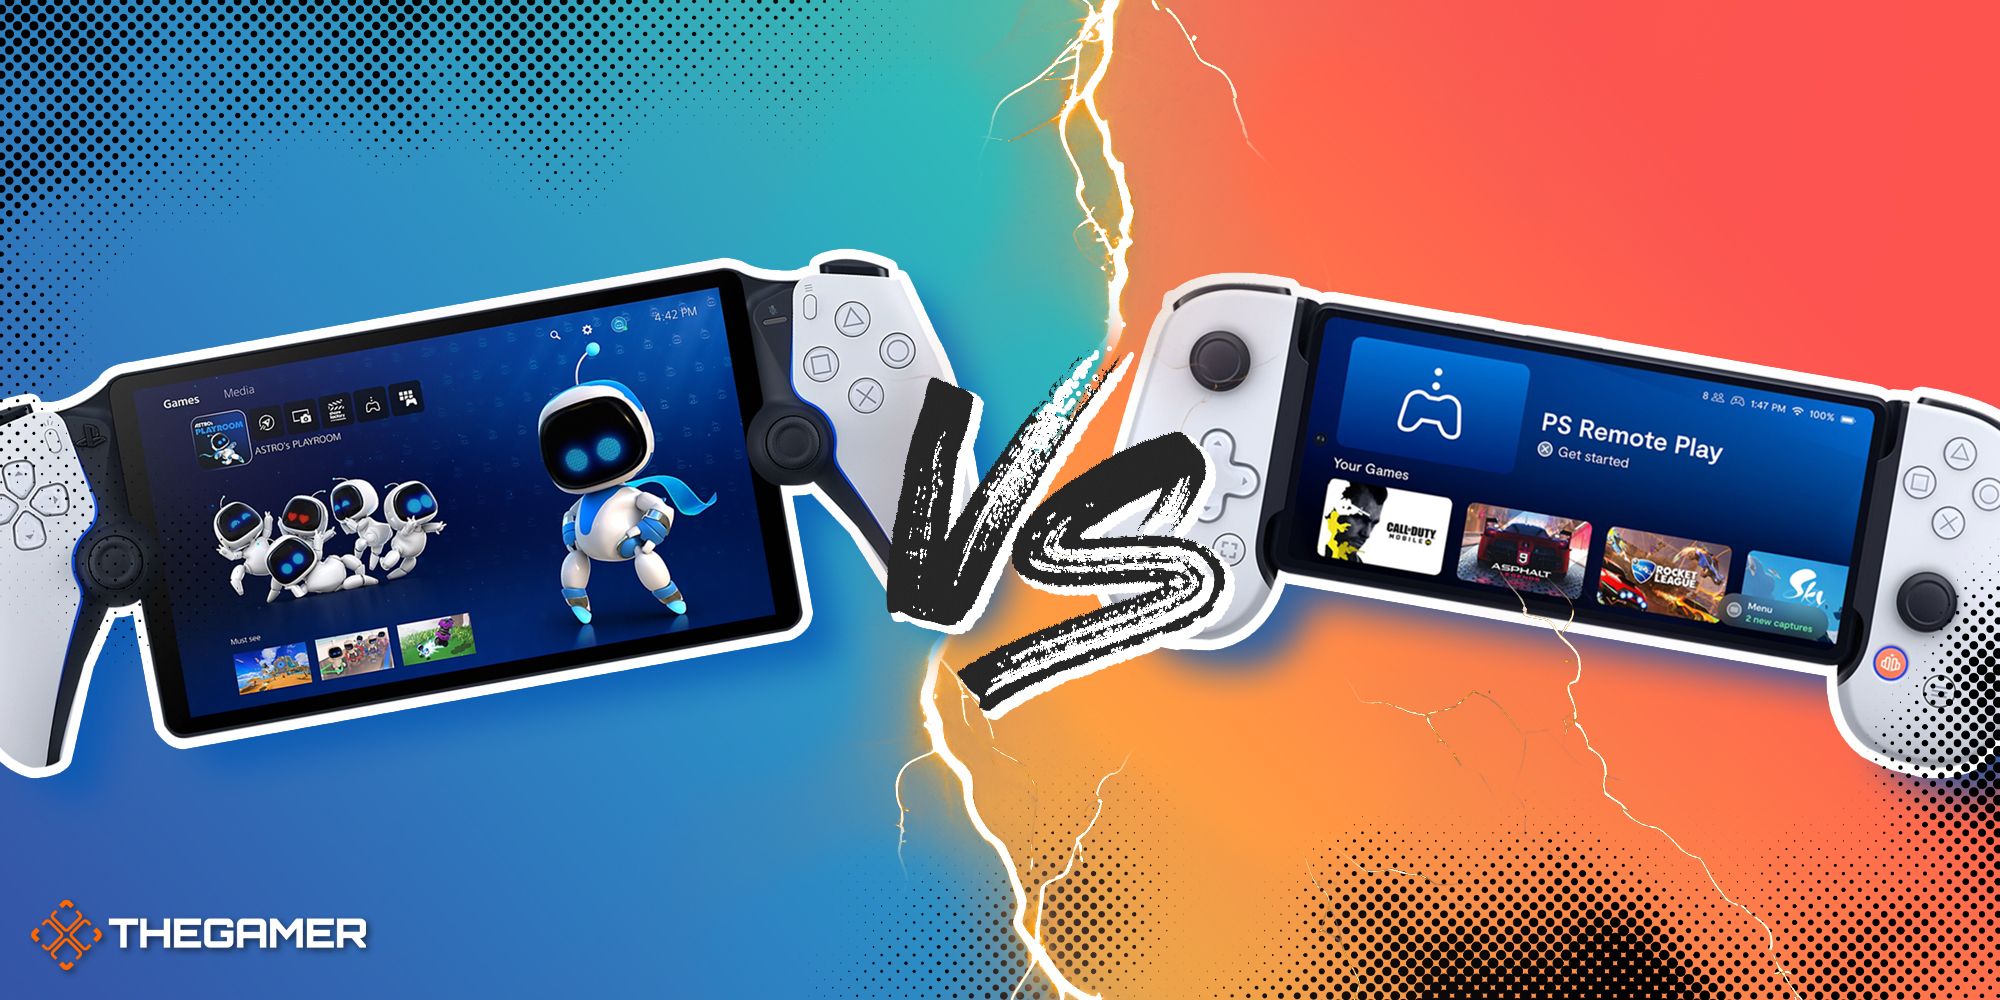 PlayStation Portal Vs. Backbone One: Which Should You Buy?